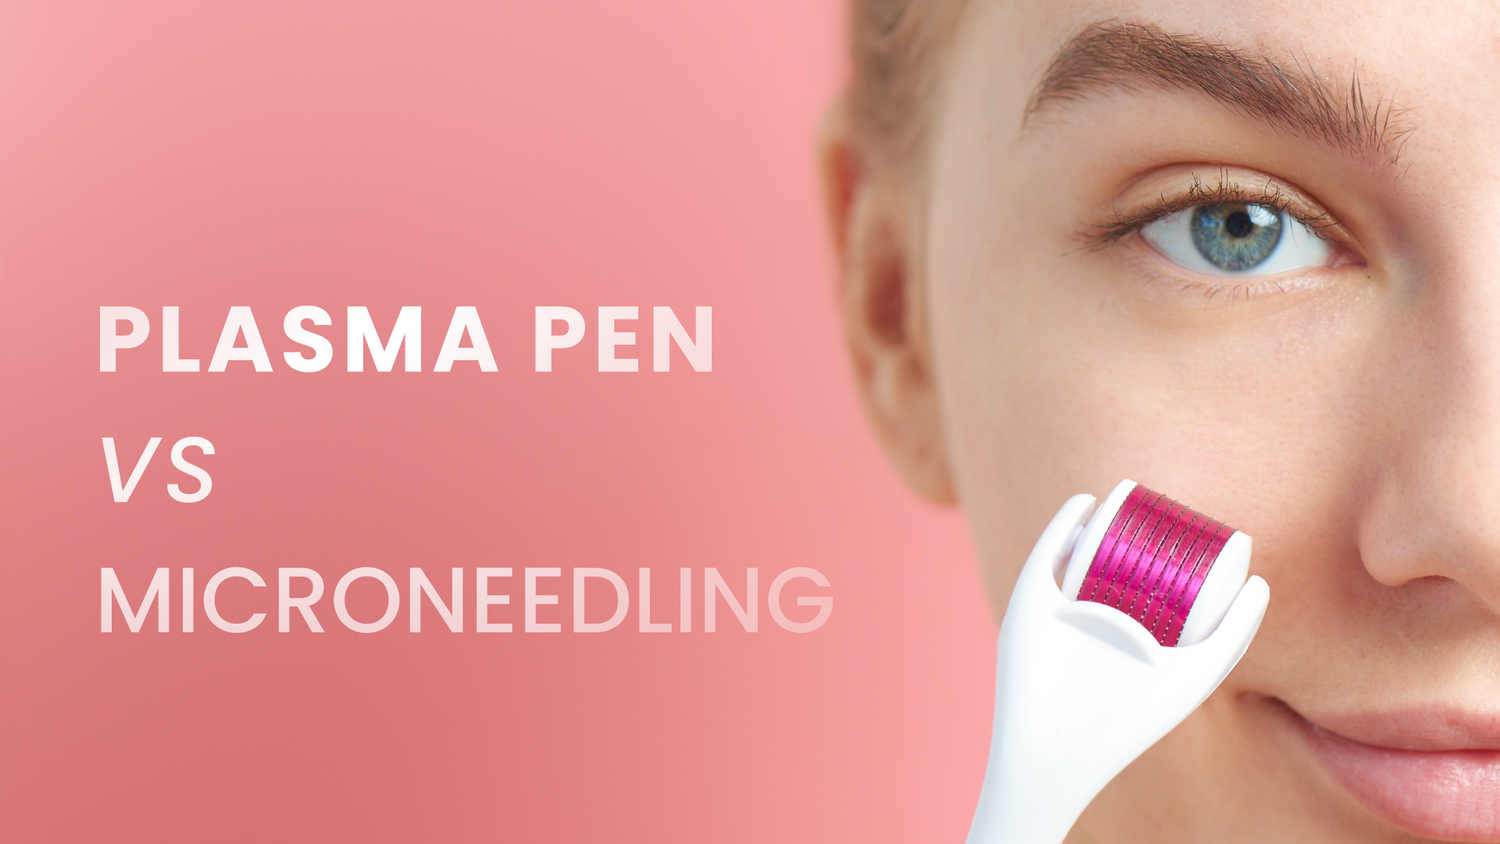 Plasma Pen vs Microneedling: Which Procedure Works Better?